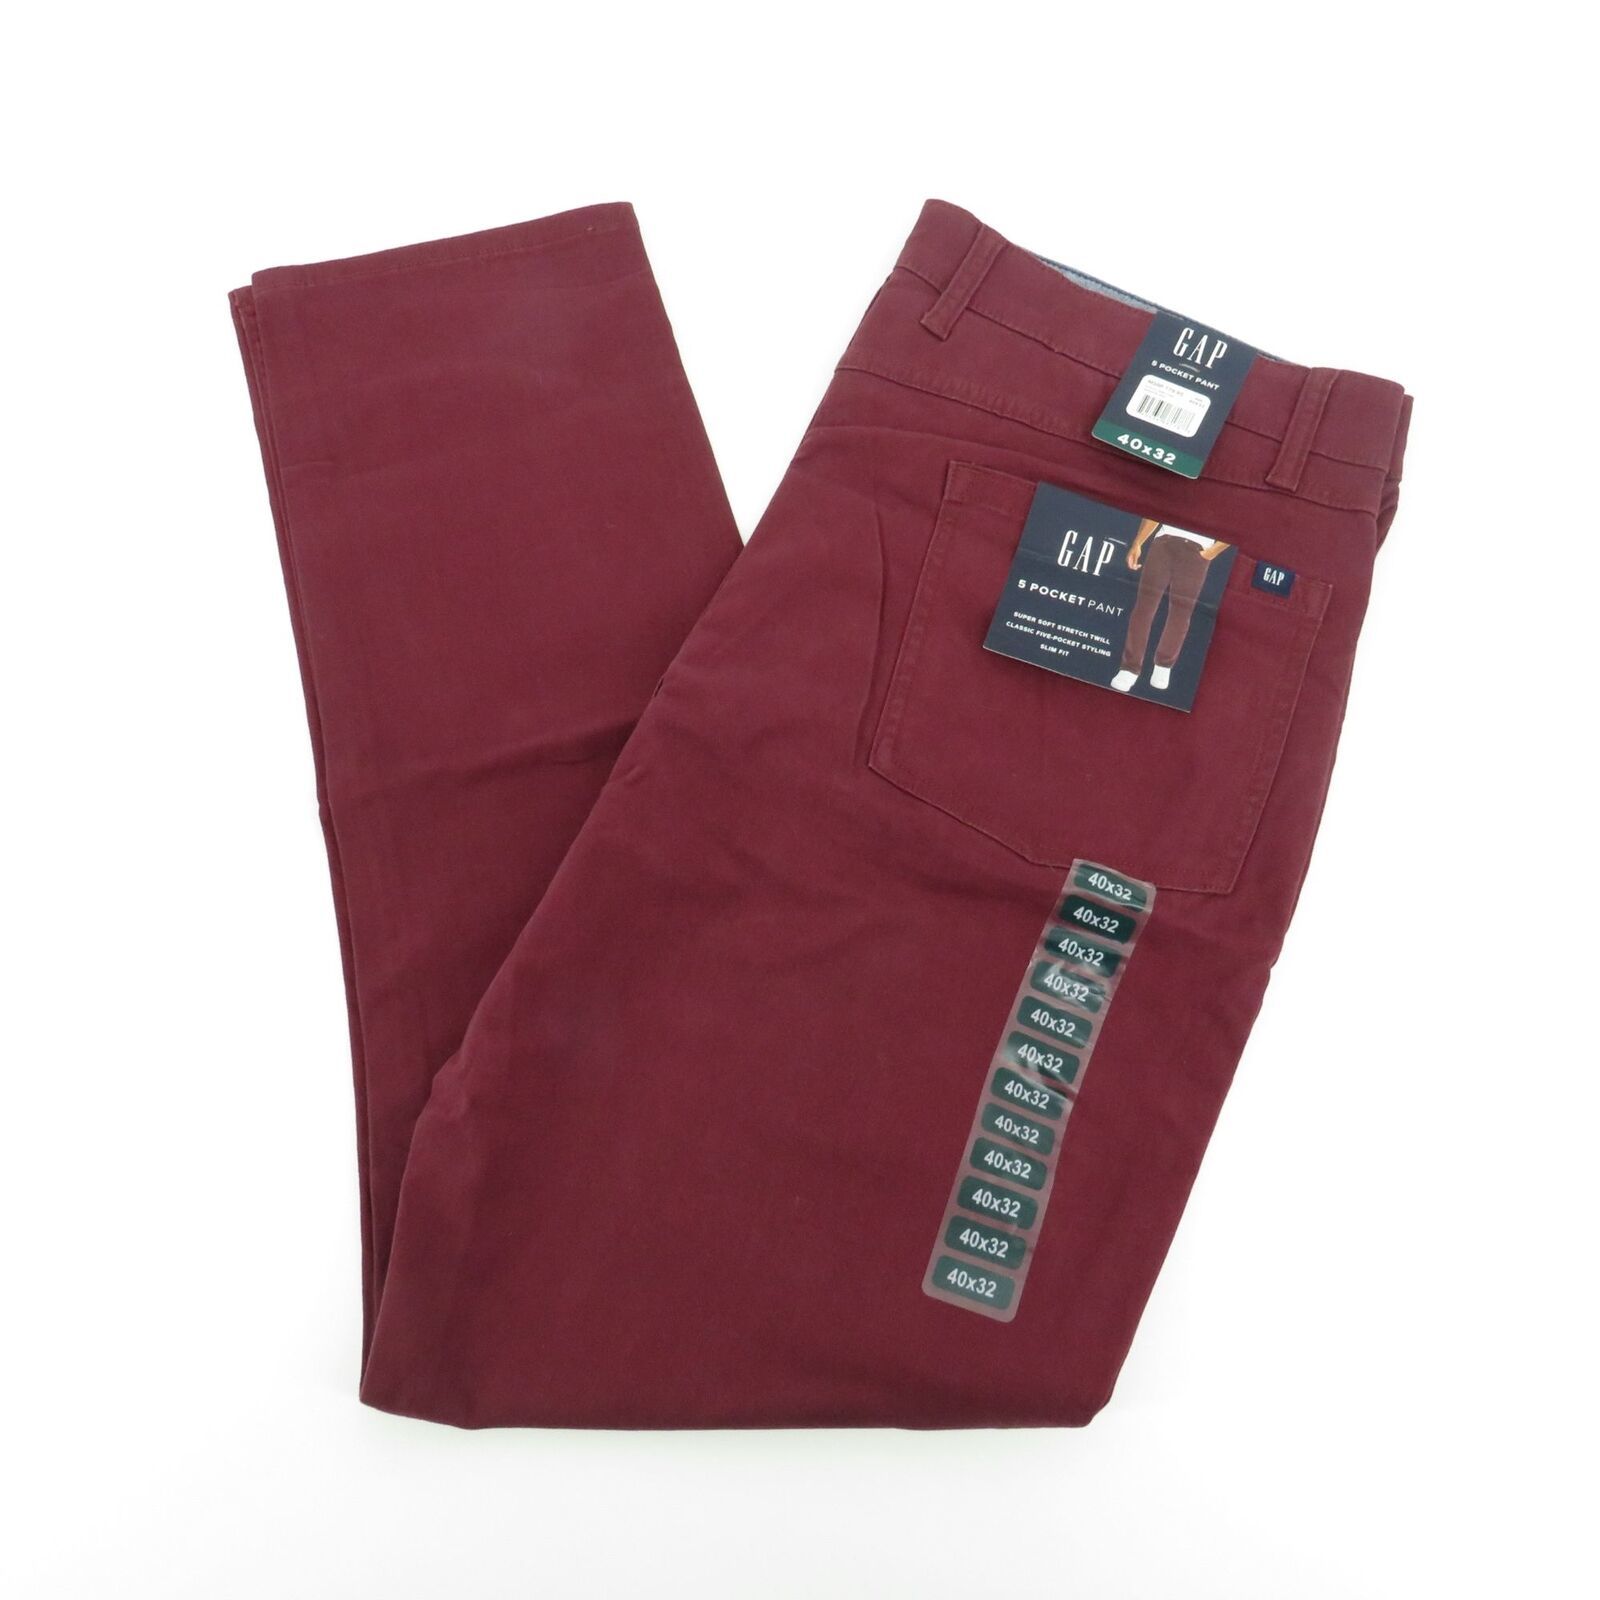 Gap Men's 5 Pocket Burgundy Pants Slim Fit 40x32 NWT $79.95 - $28.71